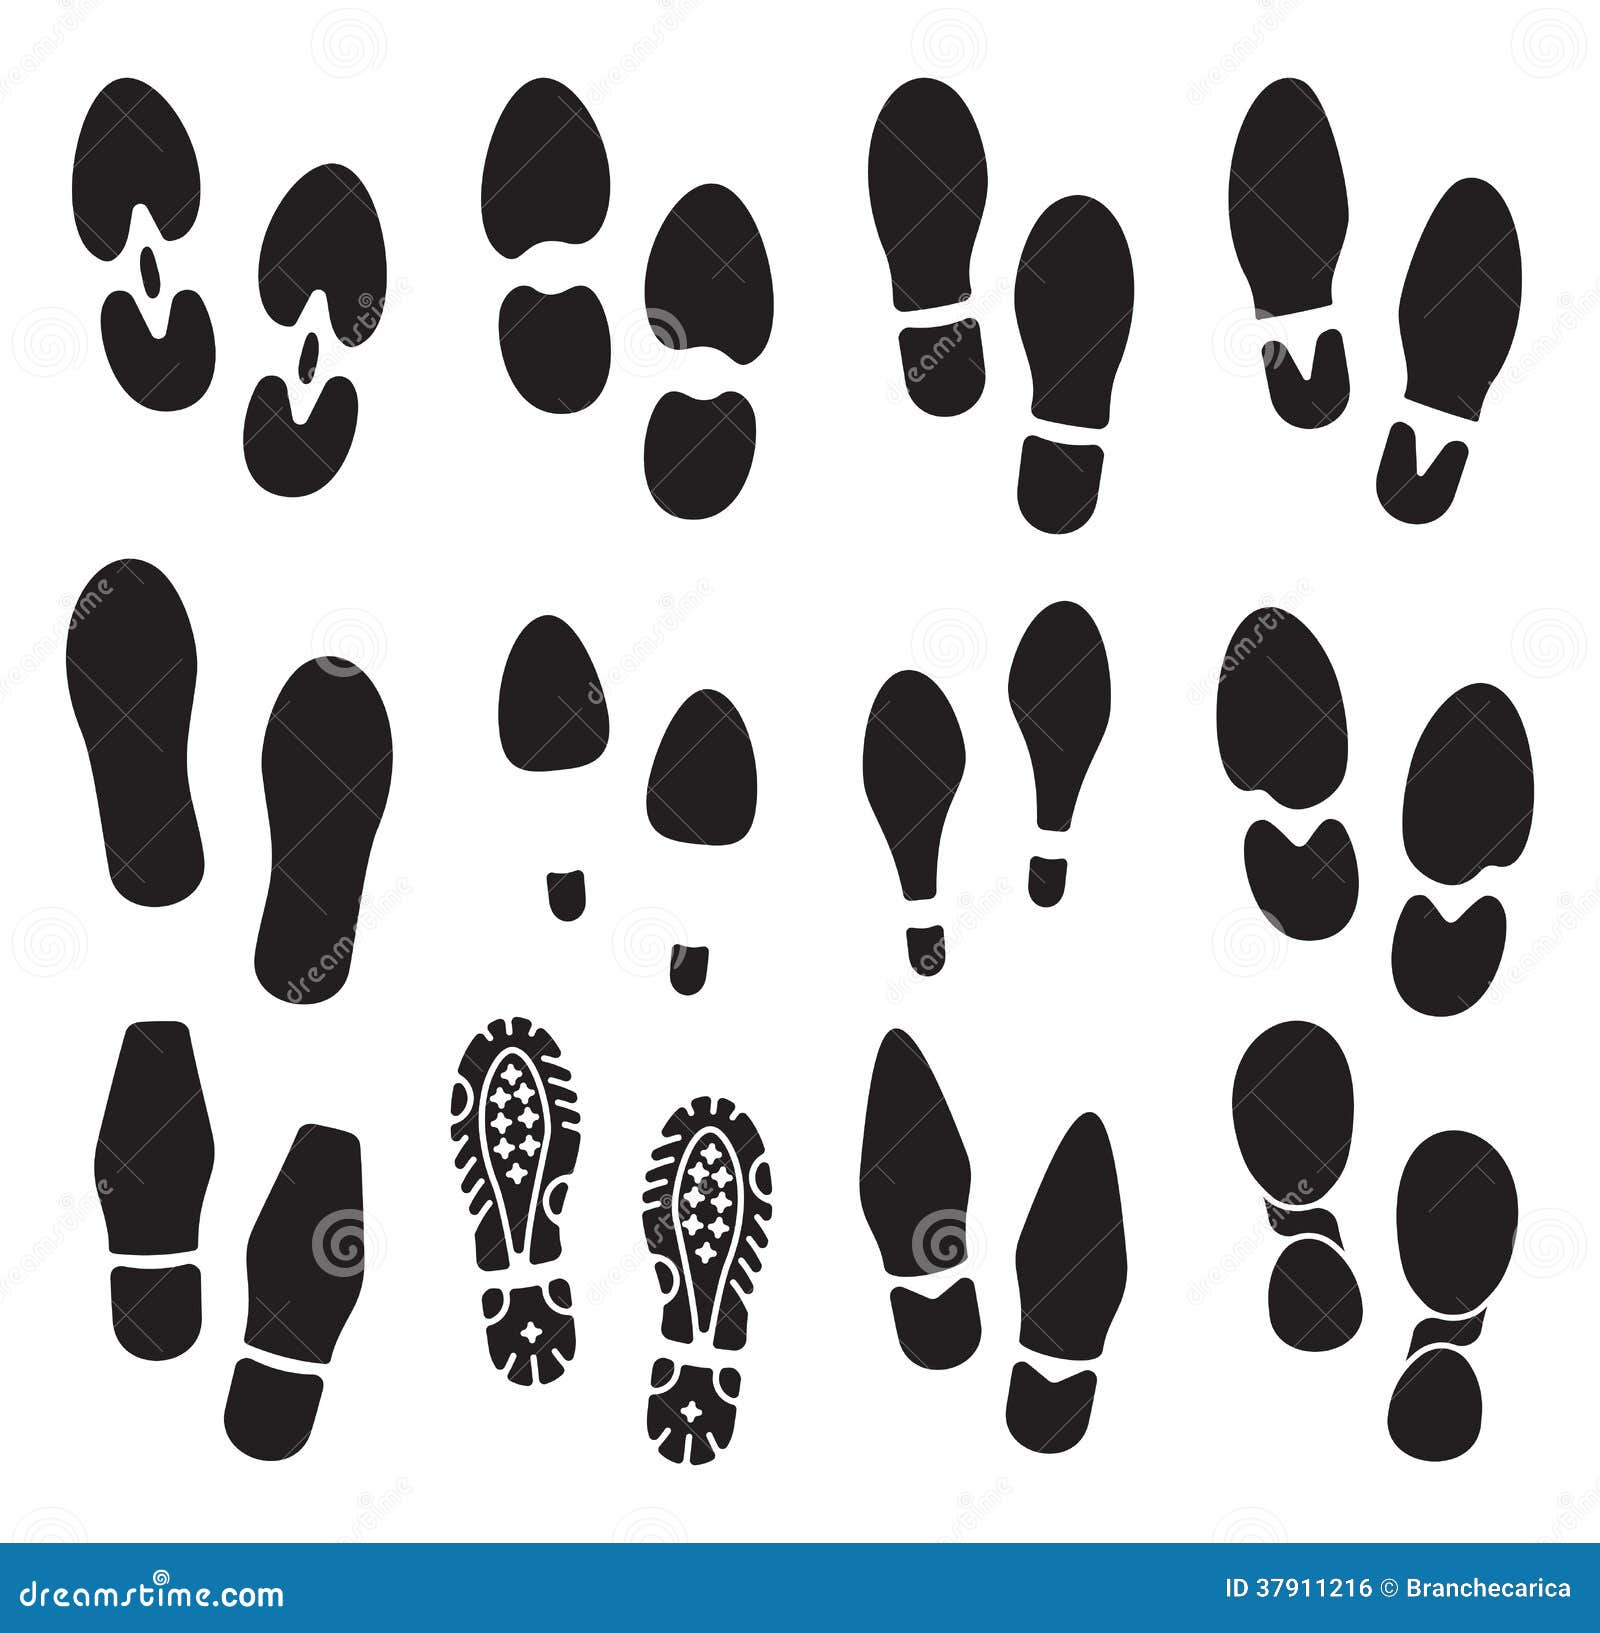 imprint soles shoes